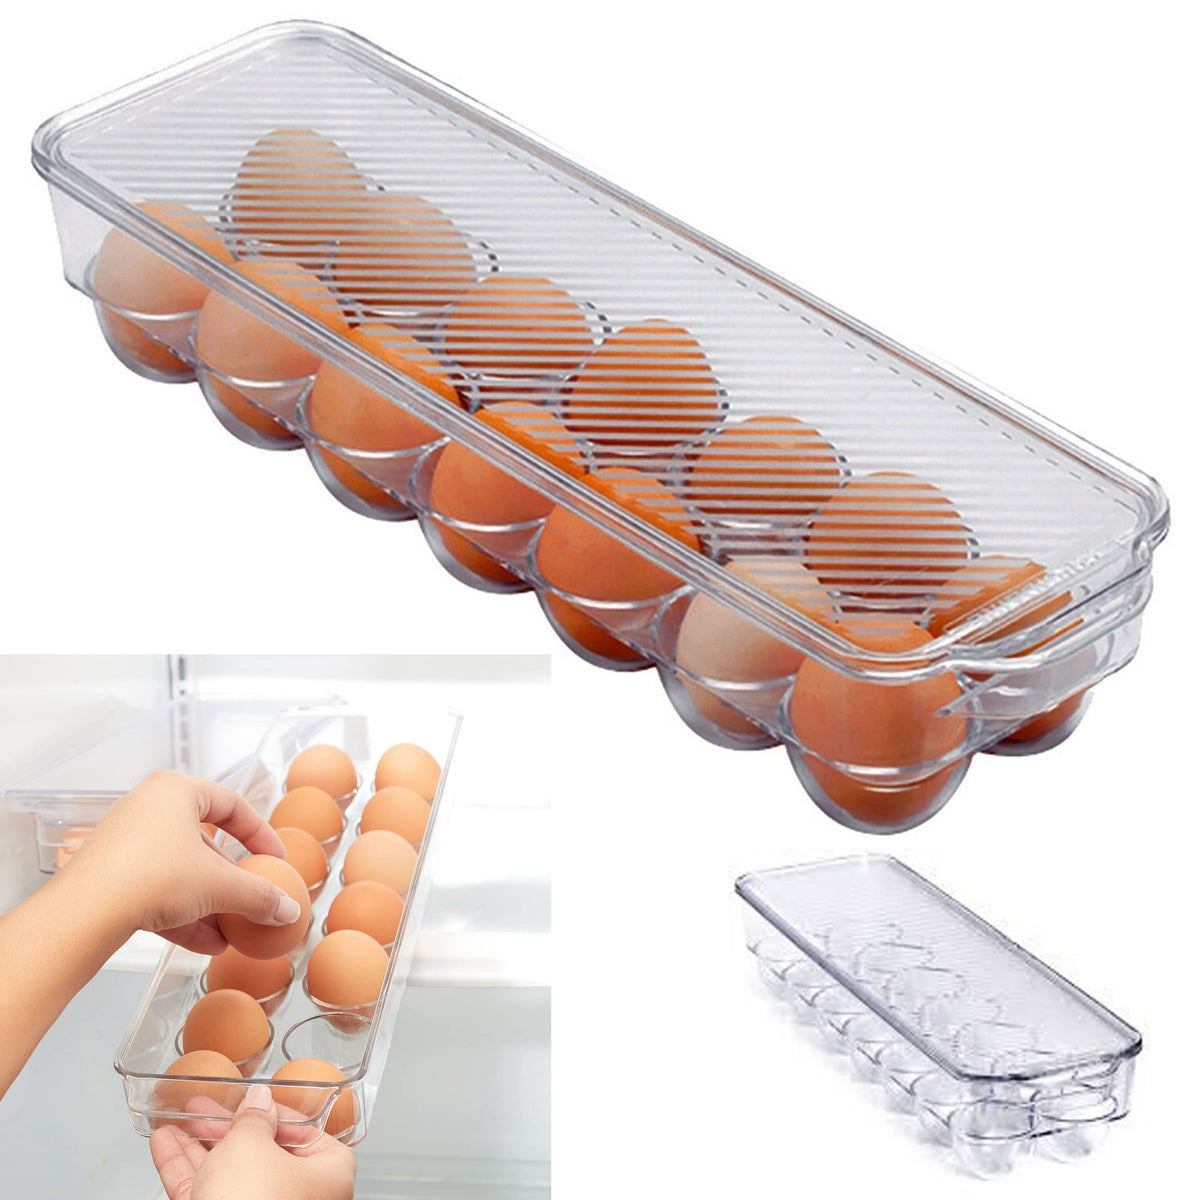 AllTopBargains 1 Kitchen Egg Tray 18 Slot Eggs Holder Lid Container Fridge Refrigerator Storage